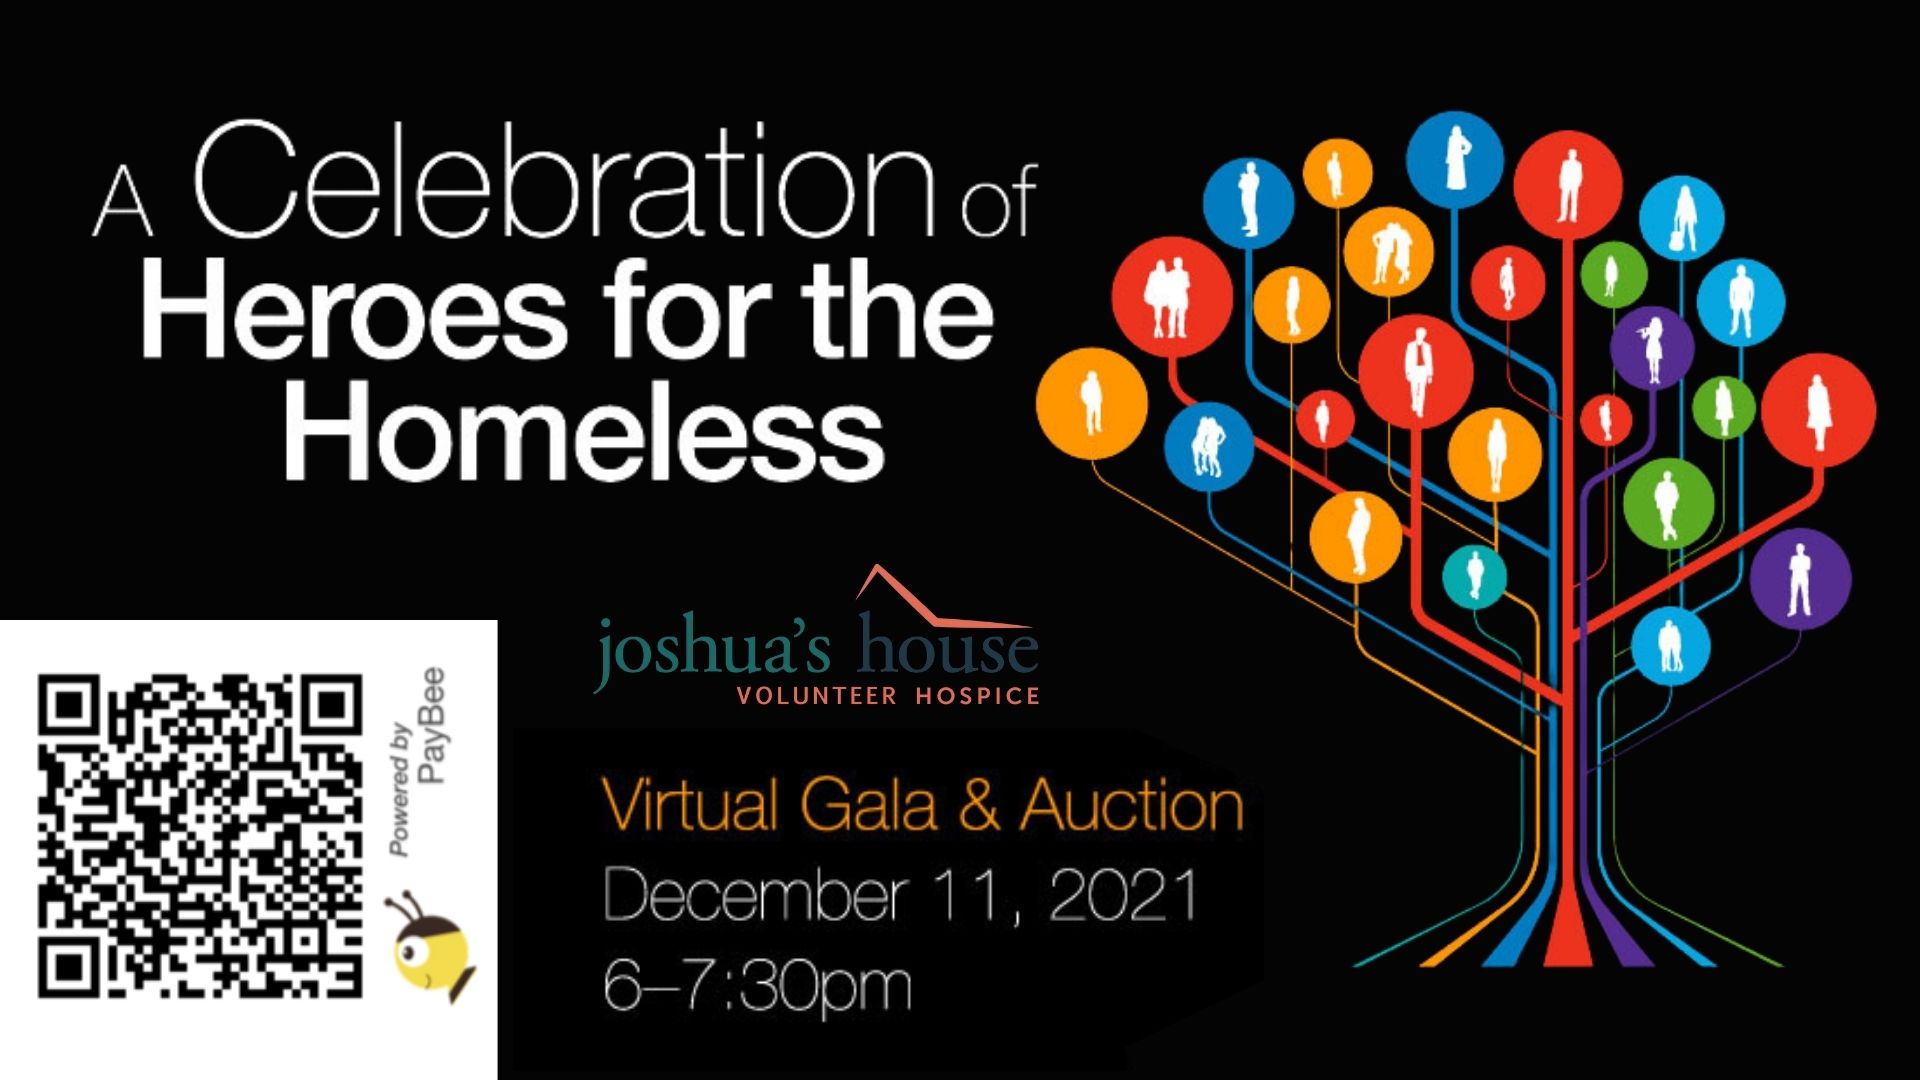 Joshua's House Hospice A Celebration of Heroes for the Homeless Virtual Gala & Auction